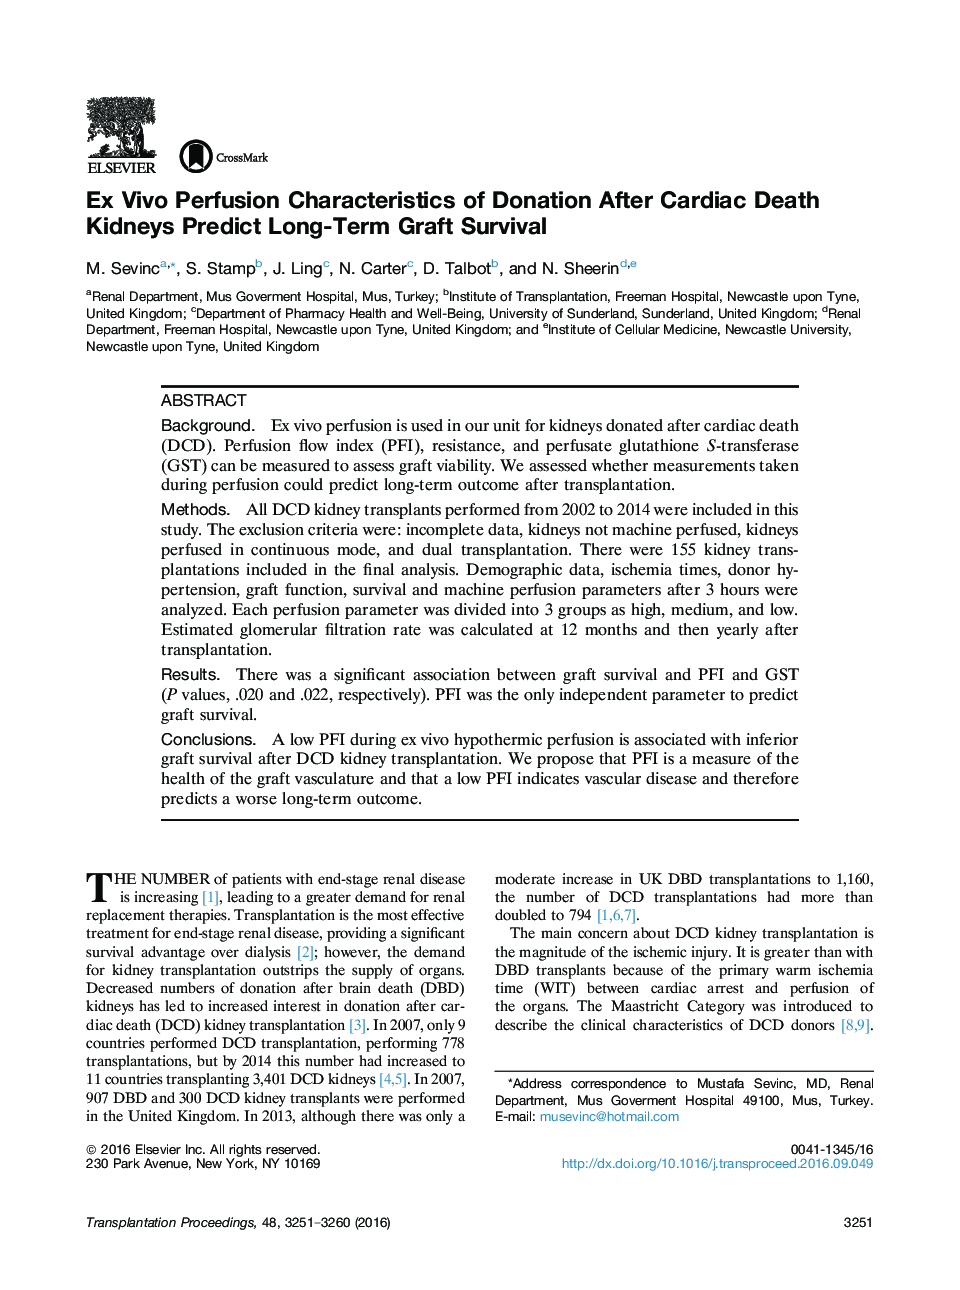 Recent Advances in TransplantationOrgan procurement and allocationExÂ Vivo Perfusion Characteristics of Donation After Cardiac Death Kidneys Predict Long-Term Graft Survival